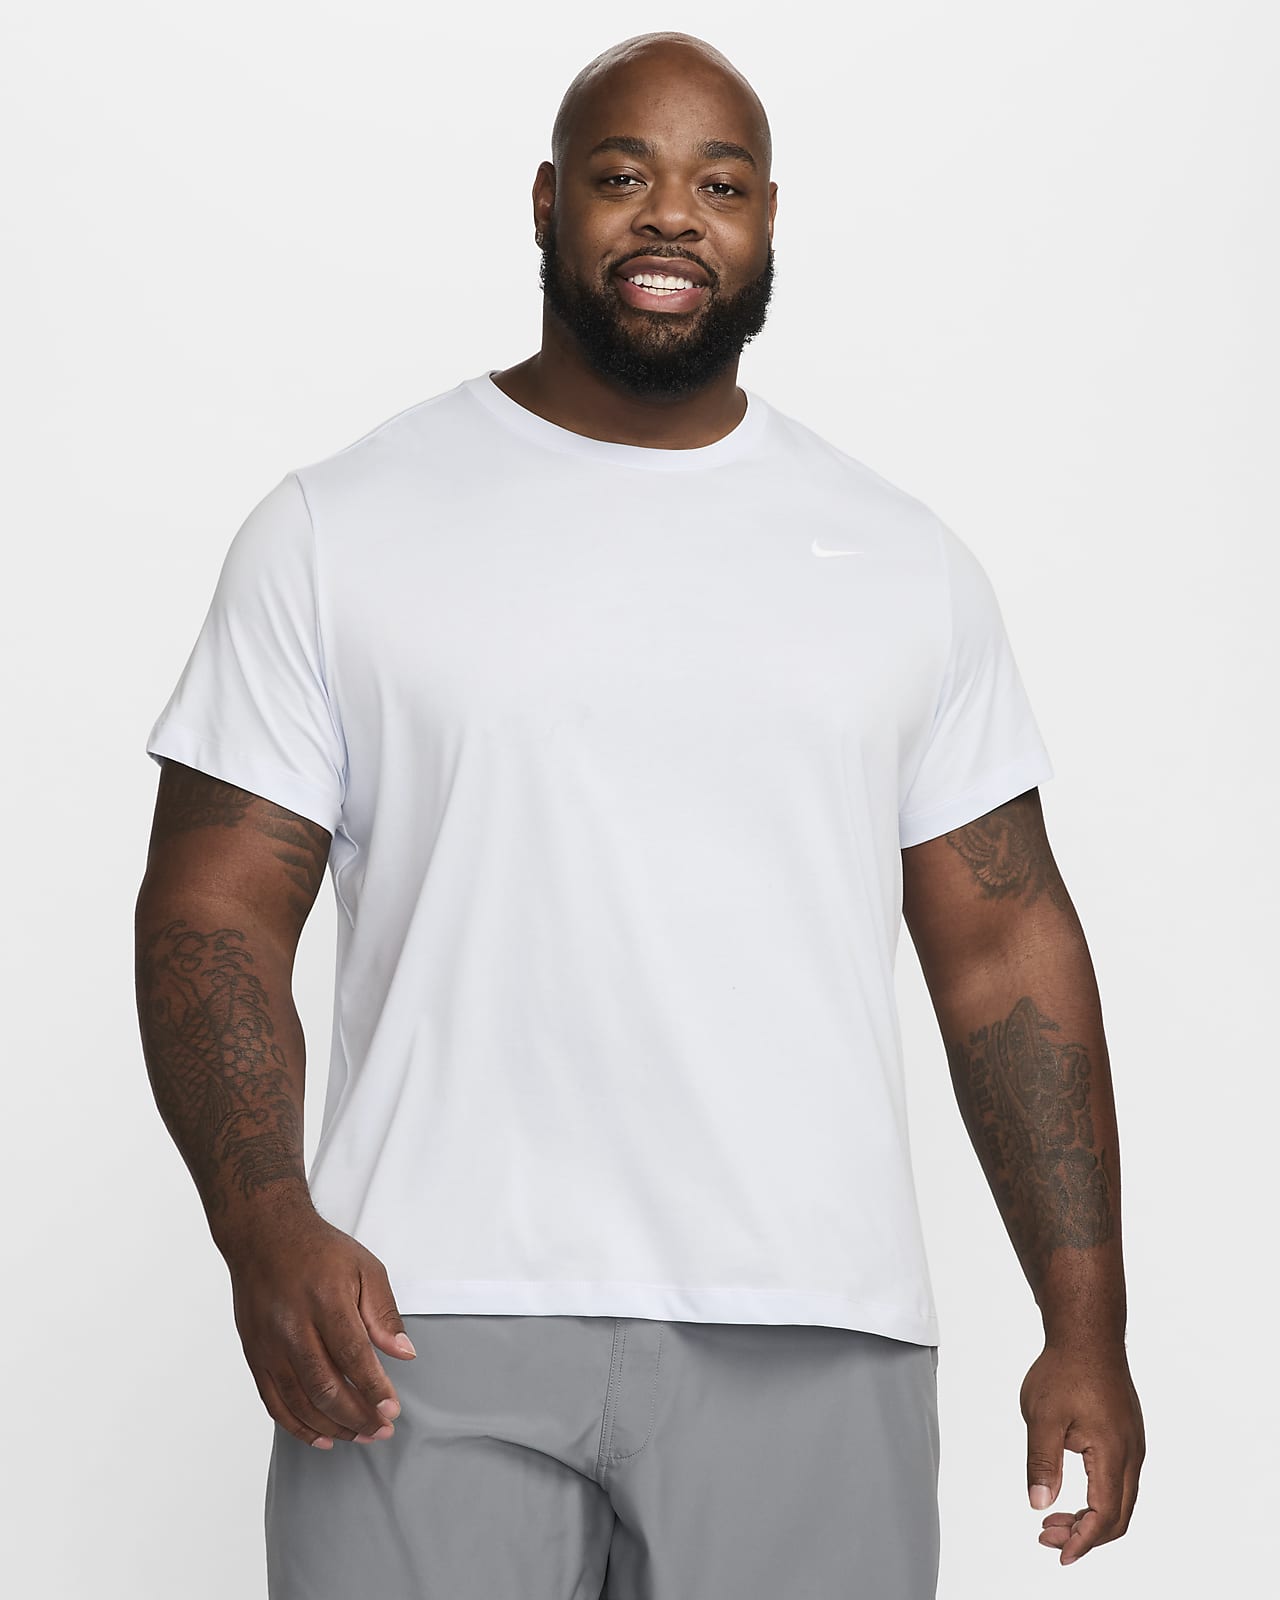 Nike Mens Dri-Fit Performance Yoga Tank Top Grey Size XL LARGE NEW